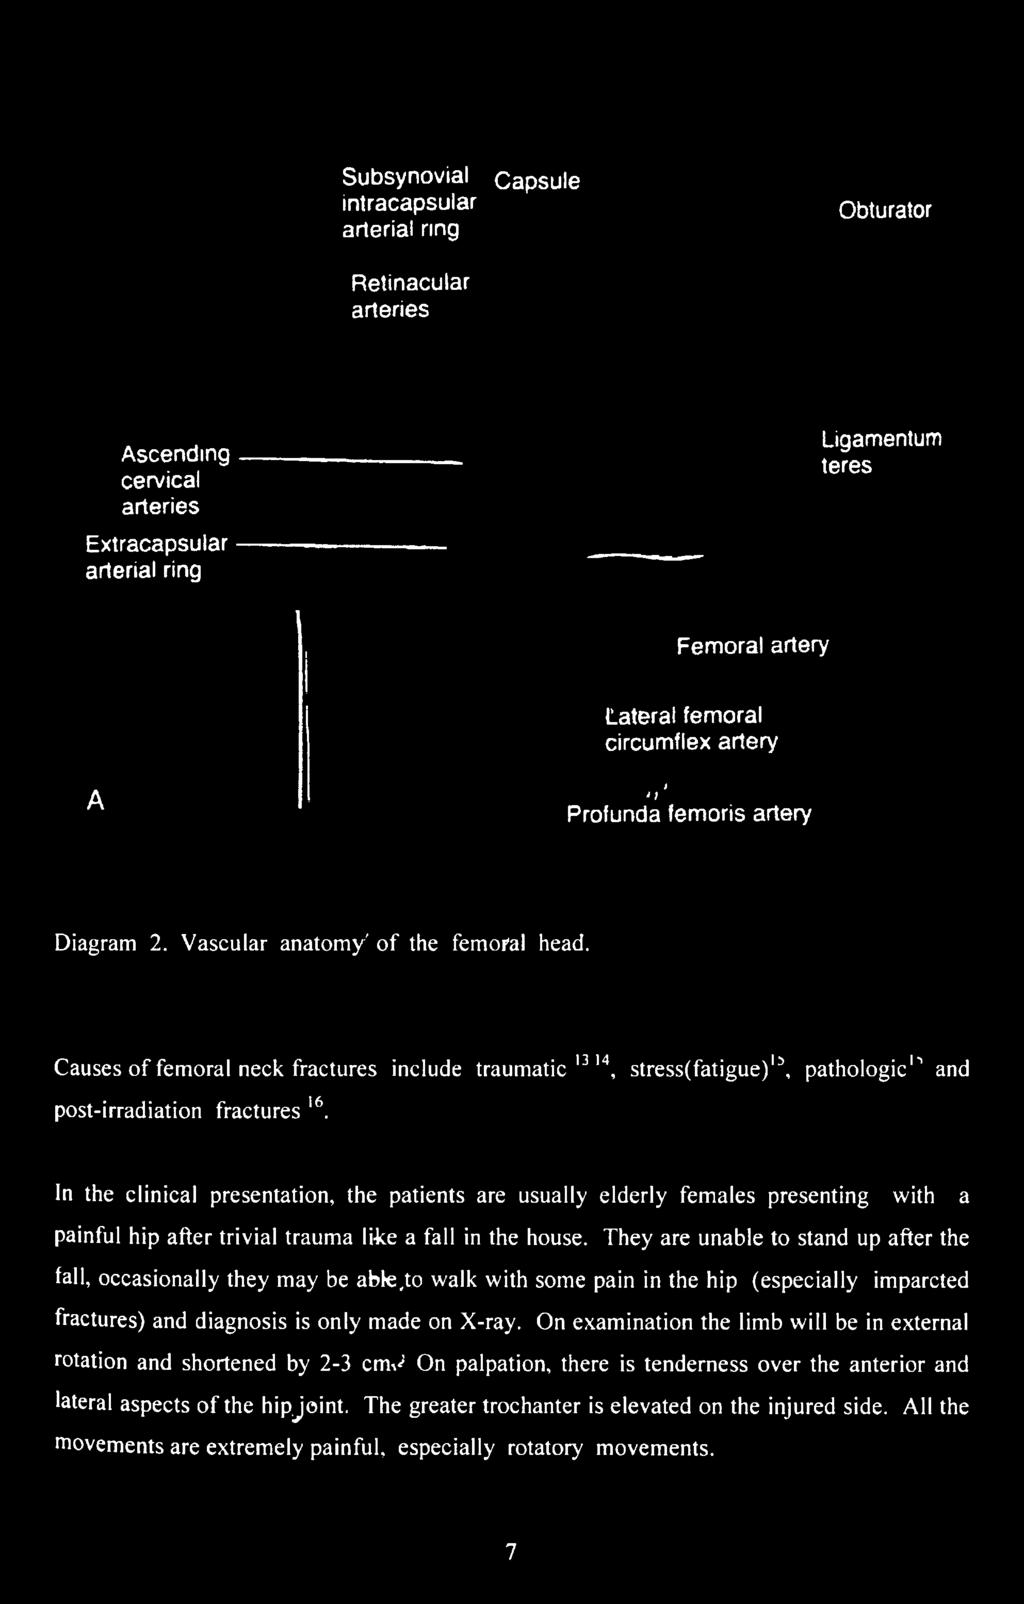 Vascular anatomy' of the femoral head.